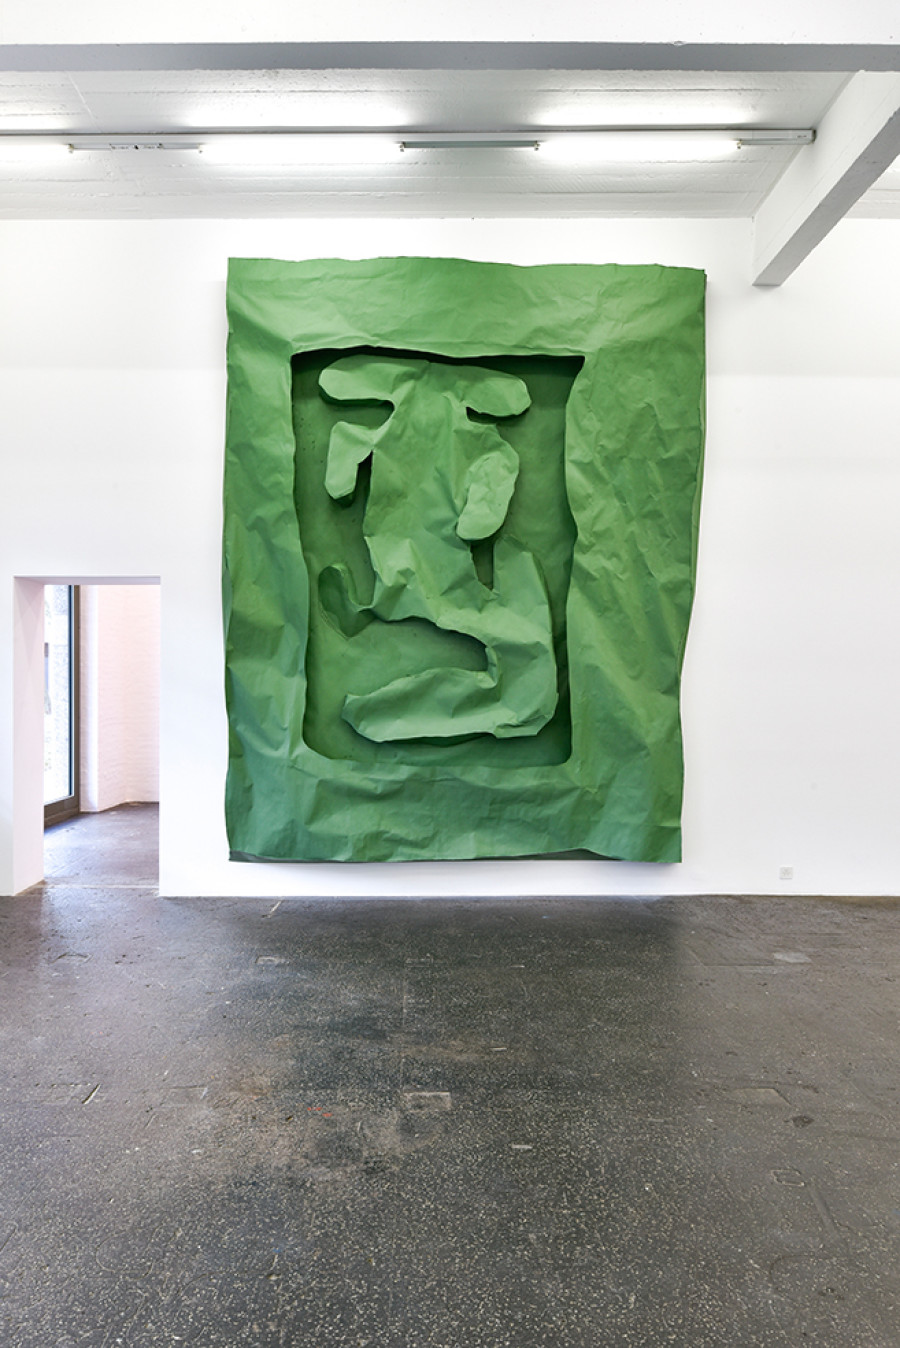 Simone Holliger, Green frame figure, 2020. Courtesy: the artist; Gallery Nicolas Krupp, Basel. Photo: Kunst Halle Sankt Gallen, Sebastian Schaub